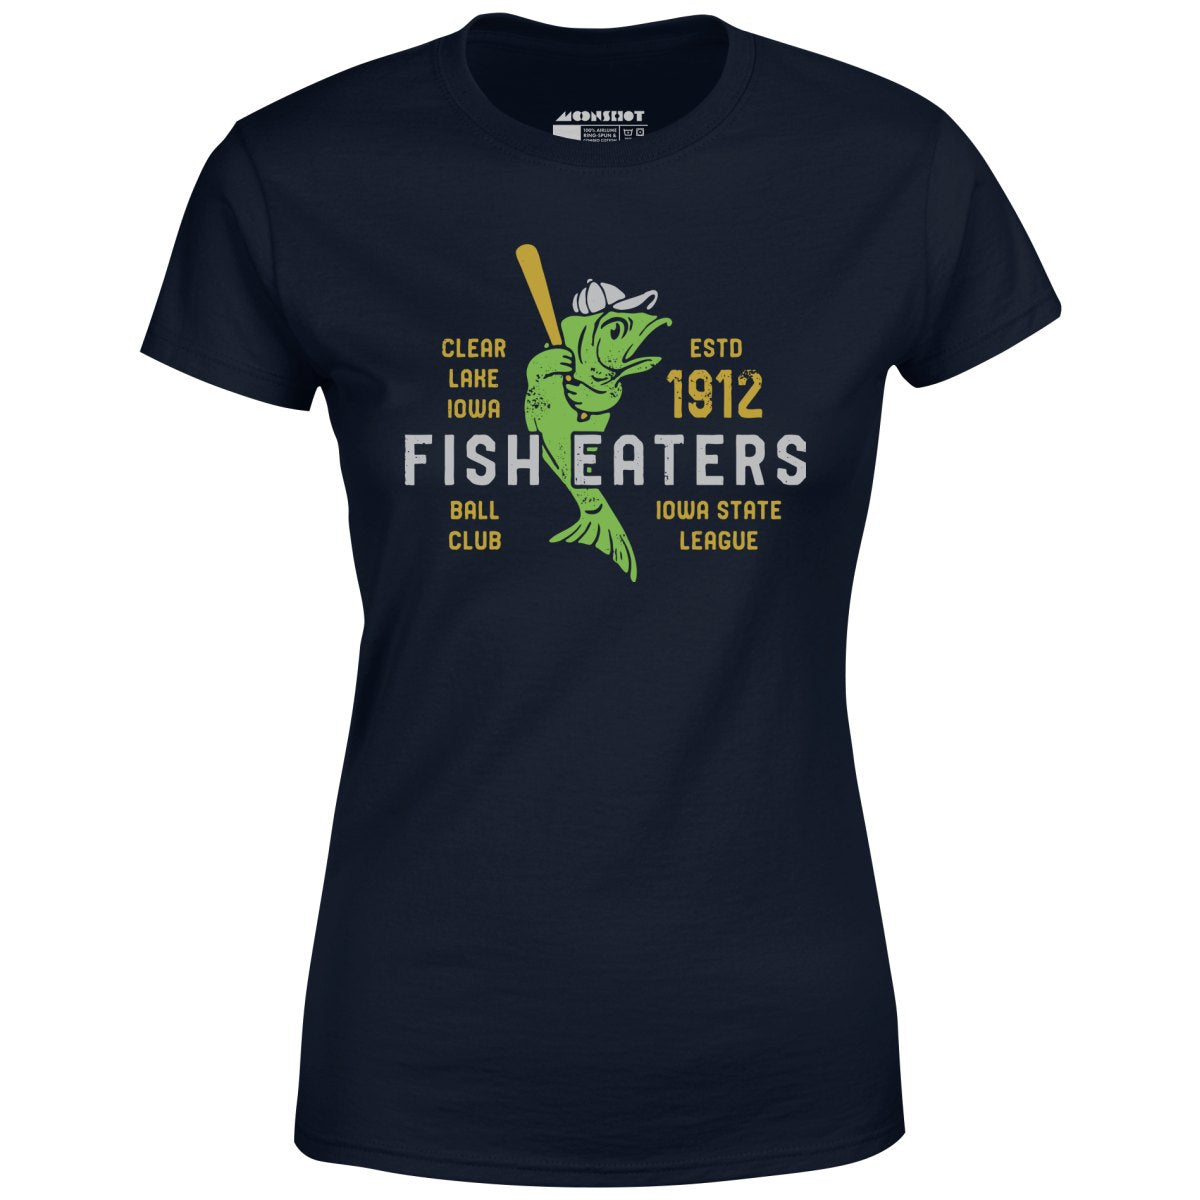 Clear Lake Fish Eaters - Iowa  - Vintage Defunct Baseball Teams - Women's T-Shirt